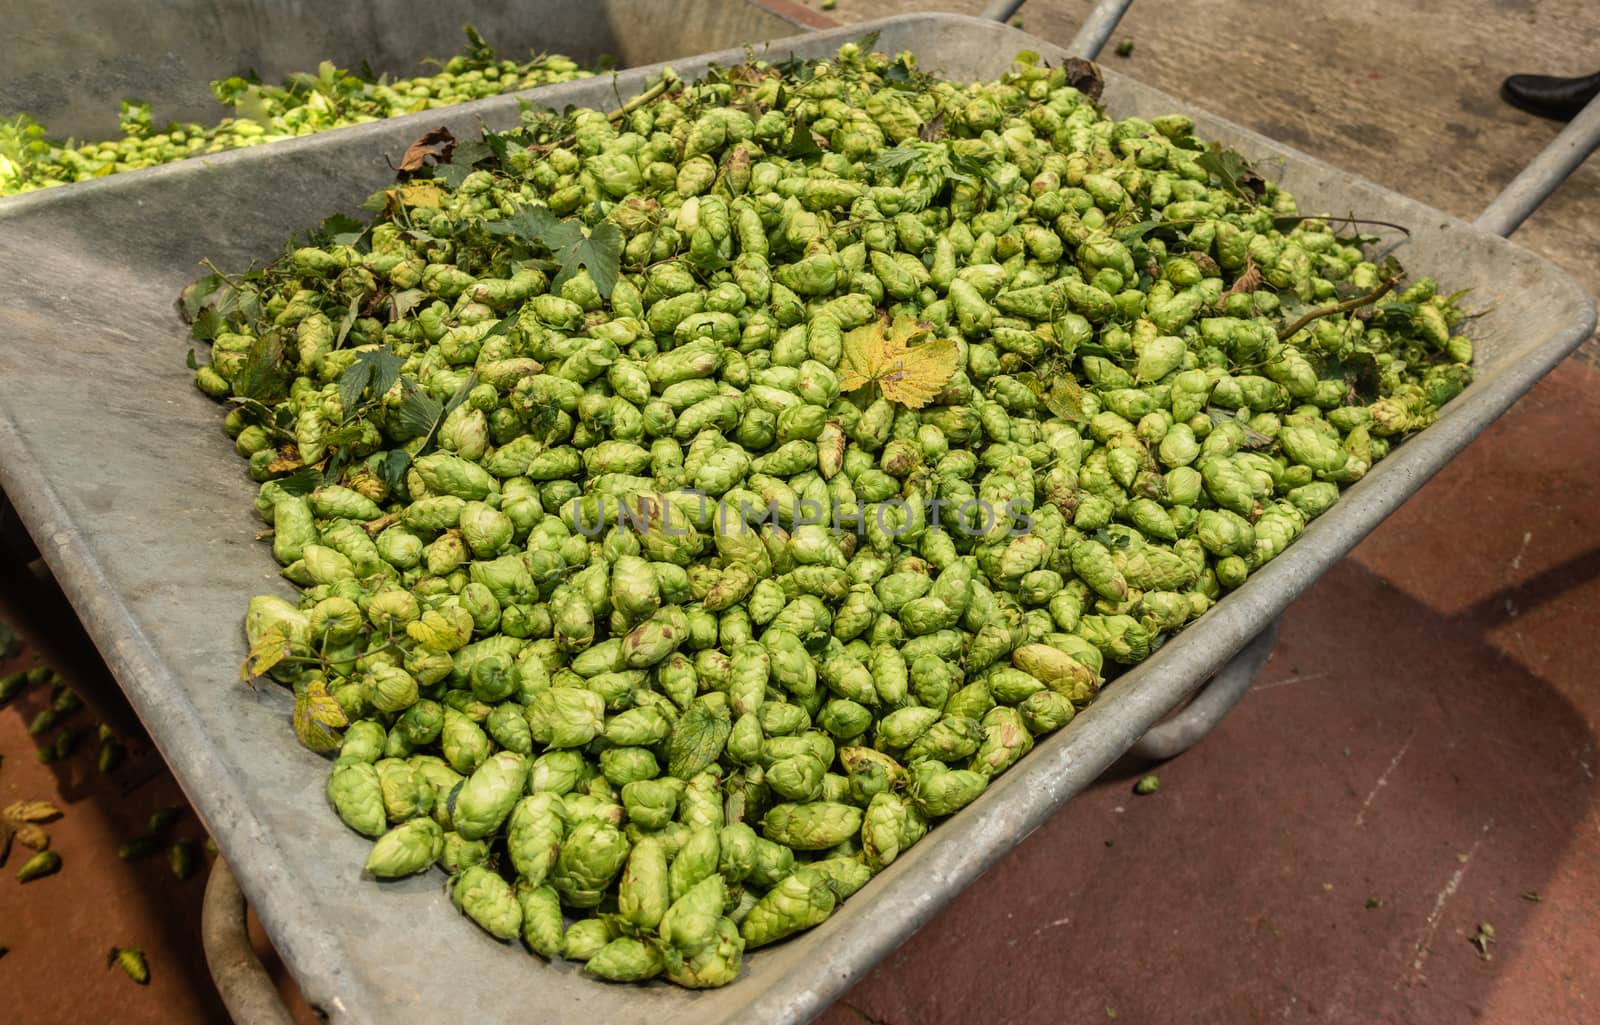 Proven, Flanders, Belgium - September 15, 2018: closeup of gray wheelbarrow full of freshly harvested green hops cones.